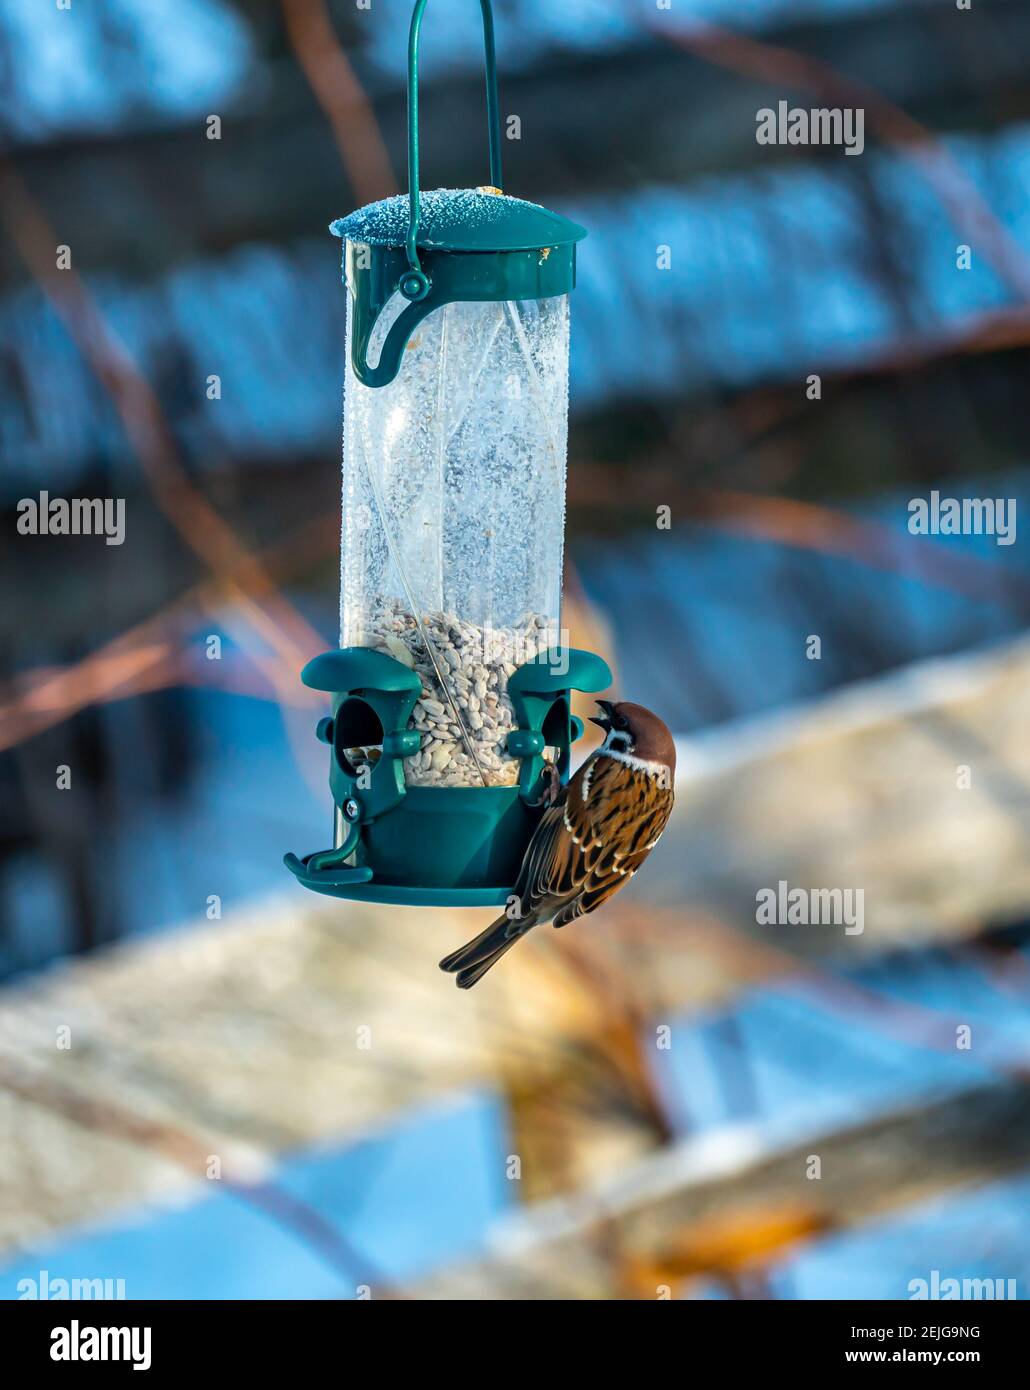 Common house sparrow , Passer domesticus eating from a garden bird feeder. Stock Photo